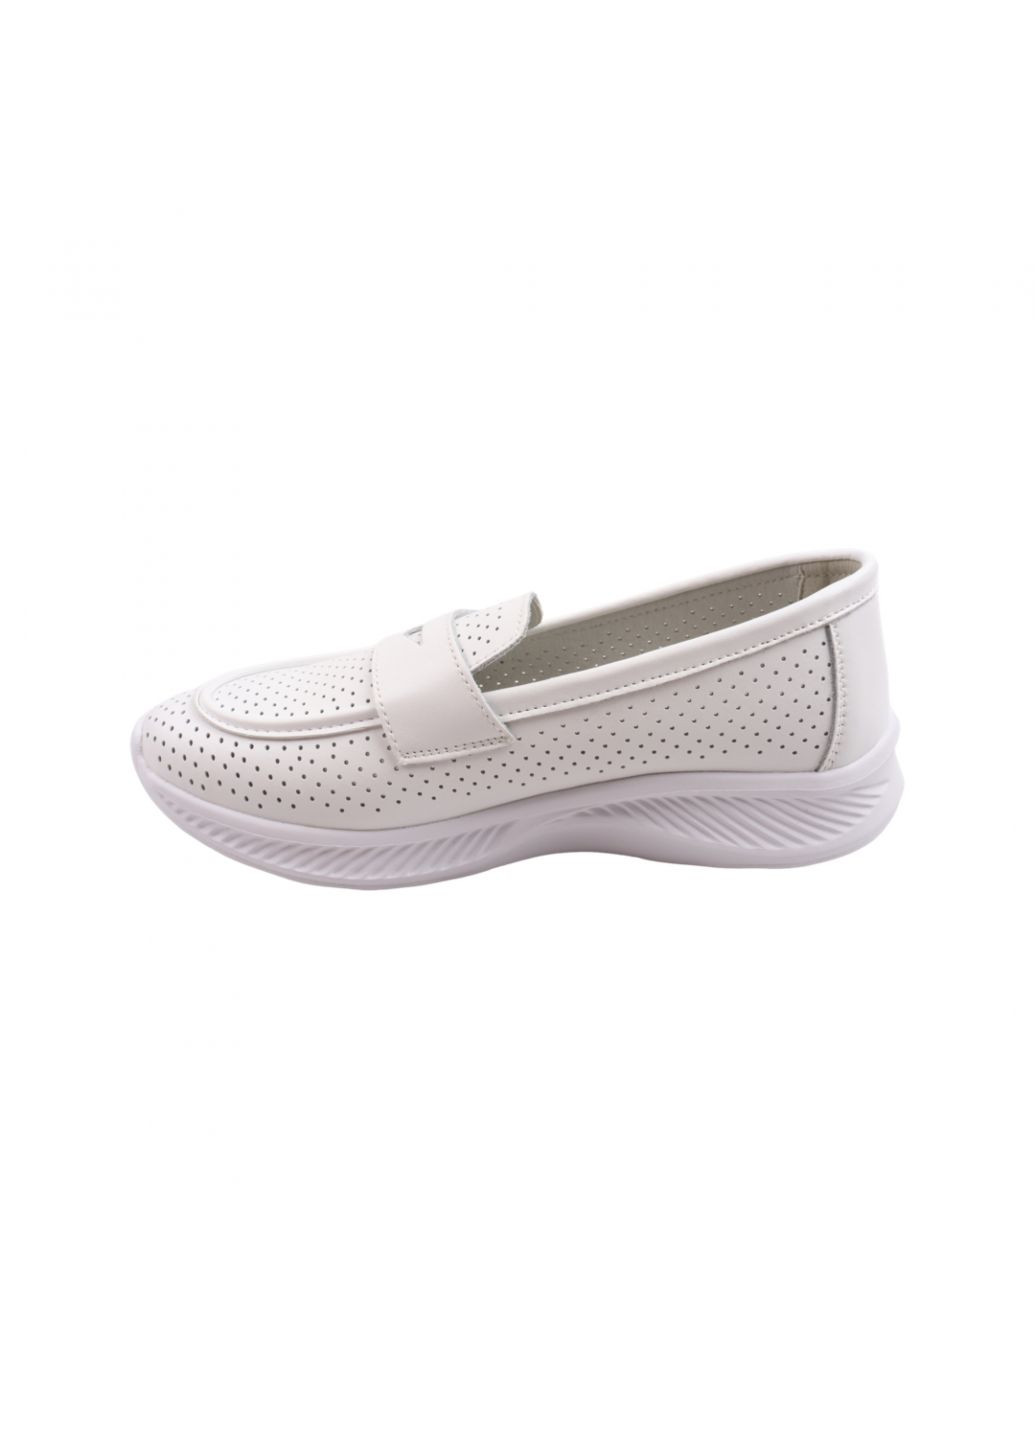 Туфлі жіночі білі натуральна шкіра Lifexpert 1163-23ltcp (257675940)